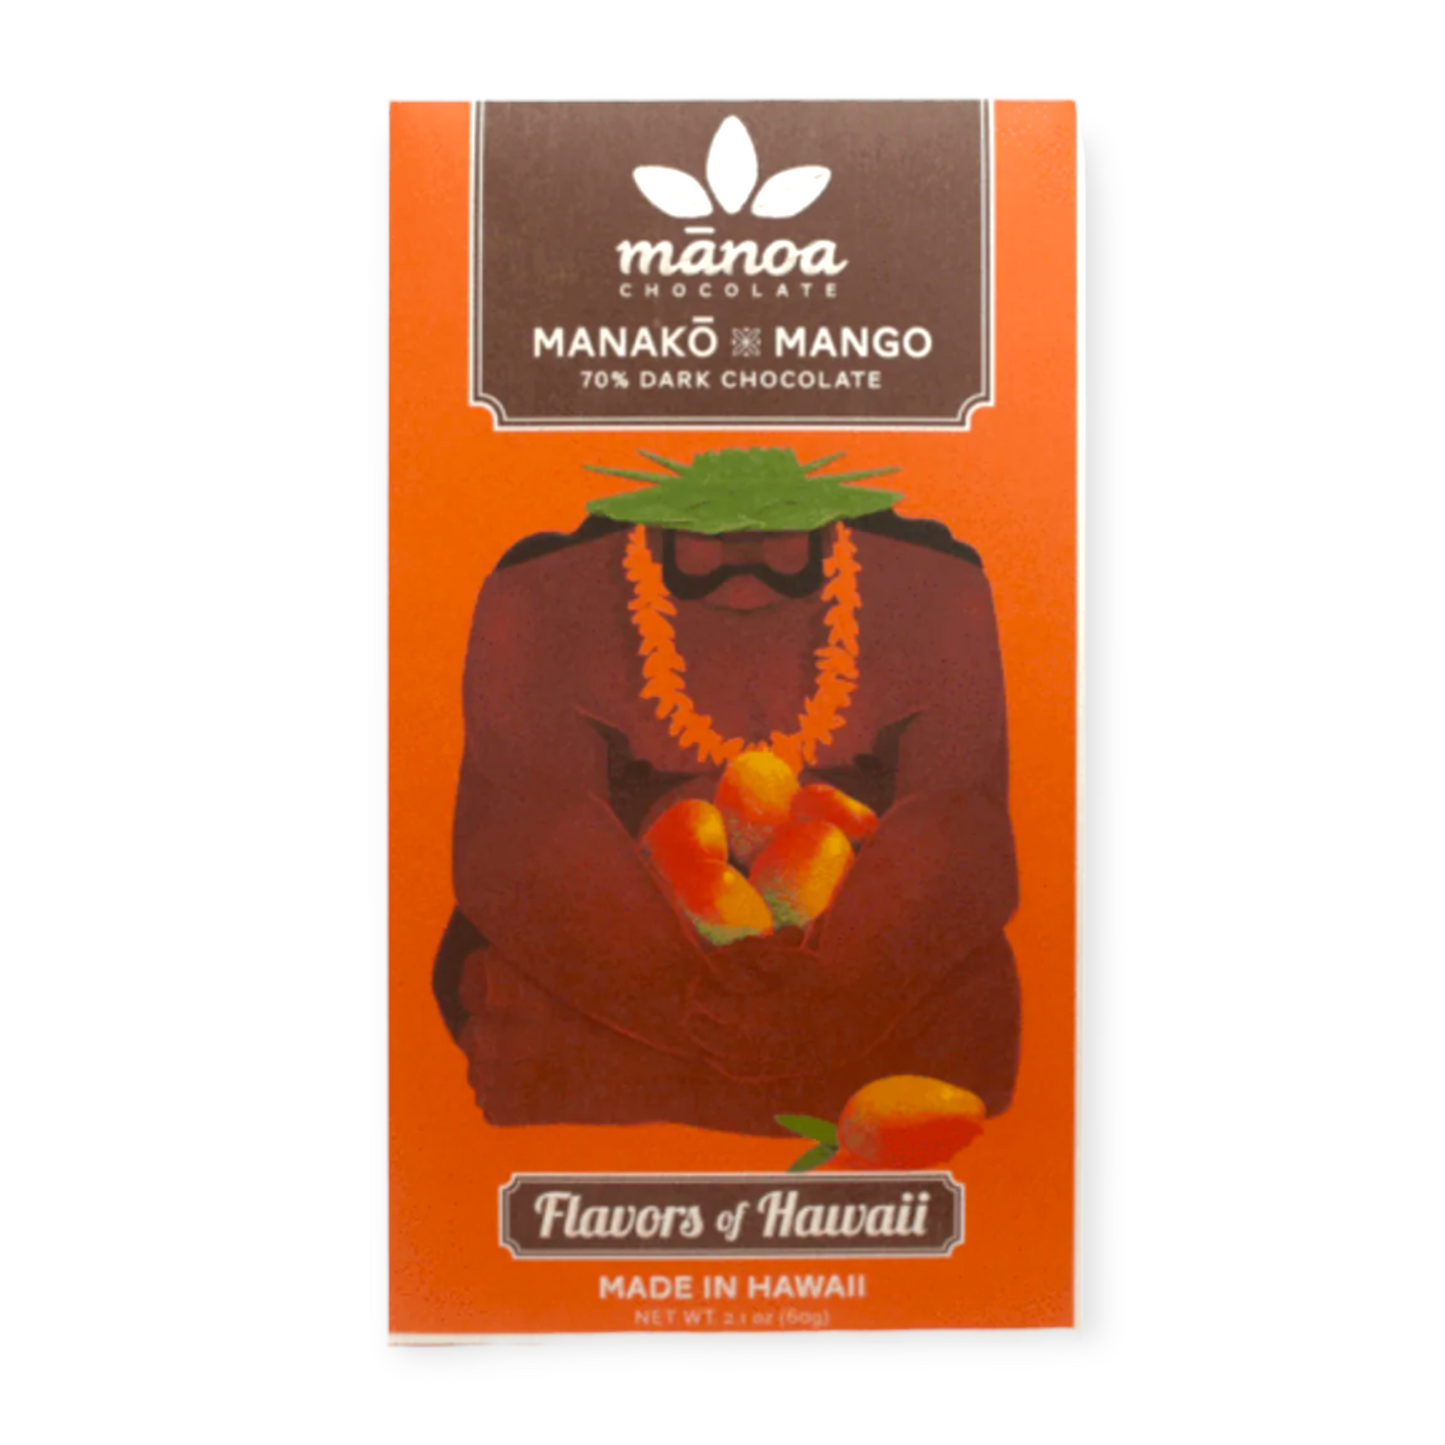 Manoa Manako Mango 70% dark chocolate